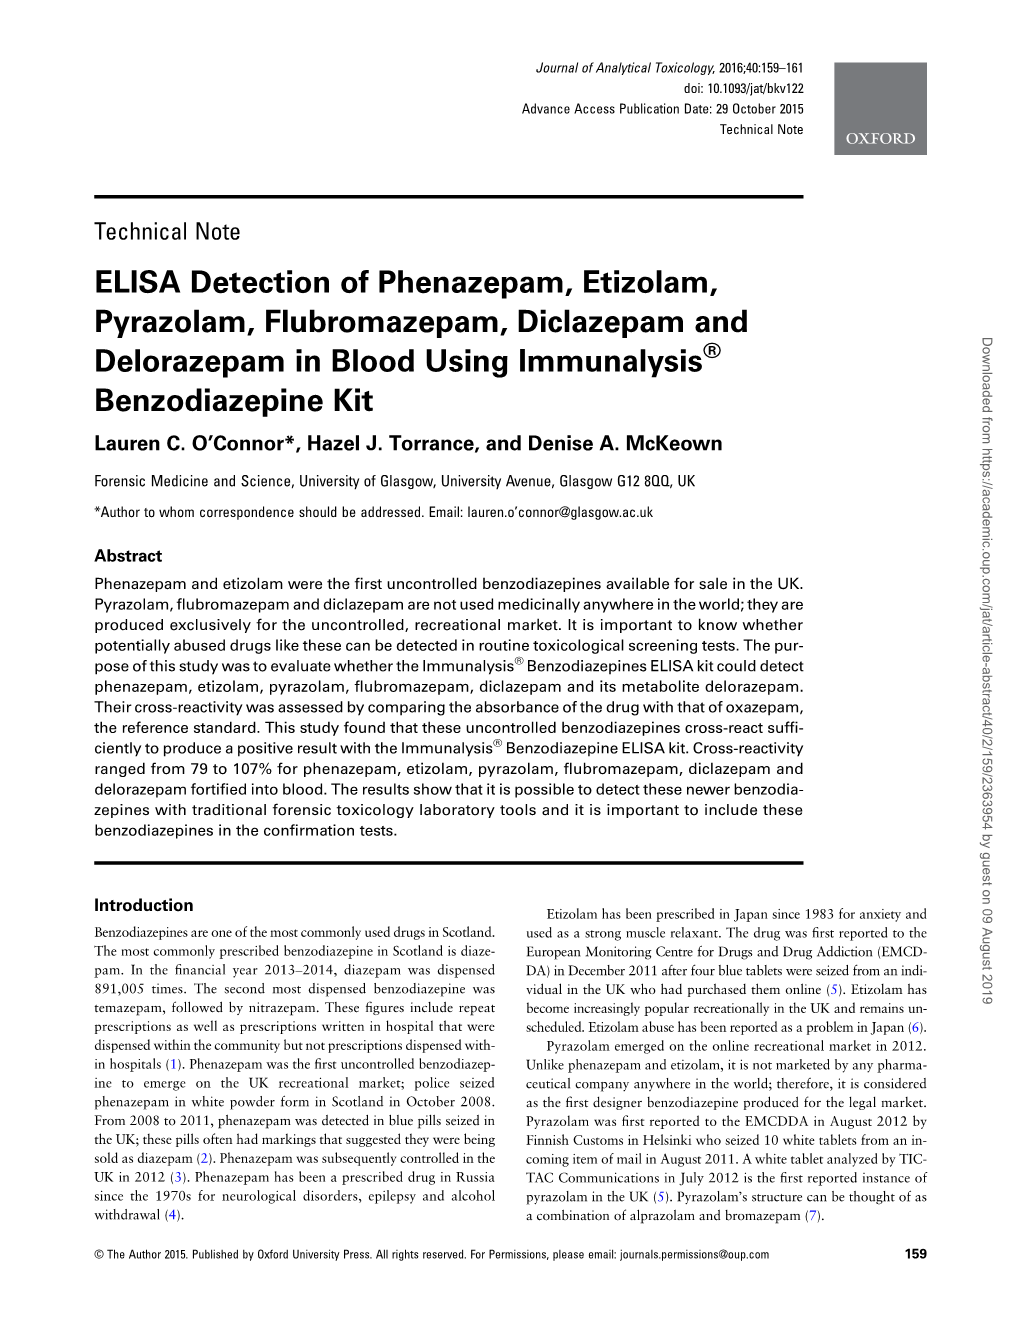 ELISA Detection of Phenazepam, Etizolam, Pyrazolam